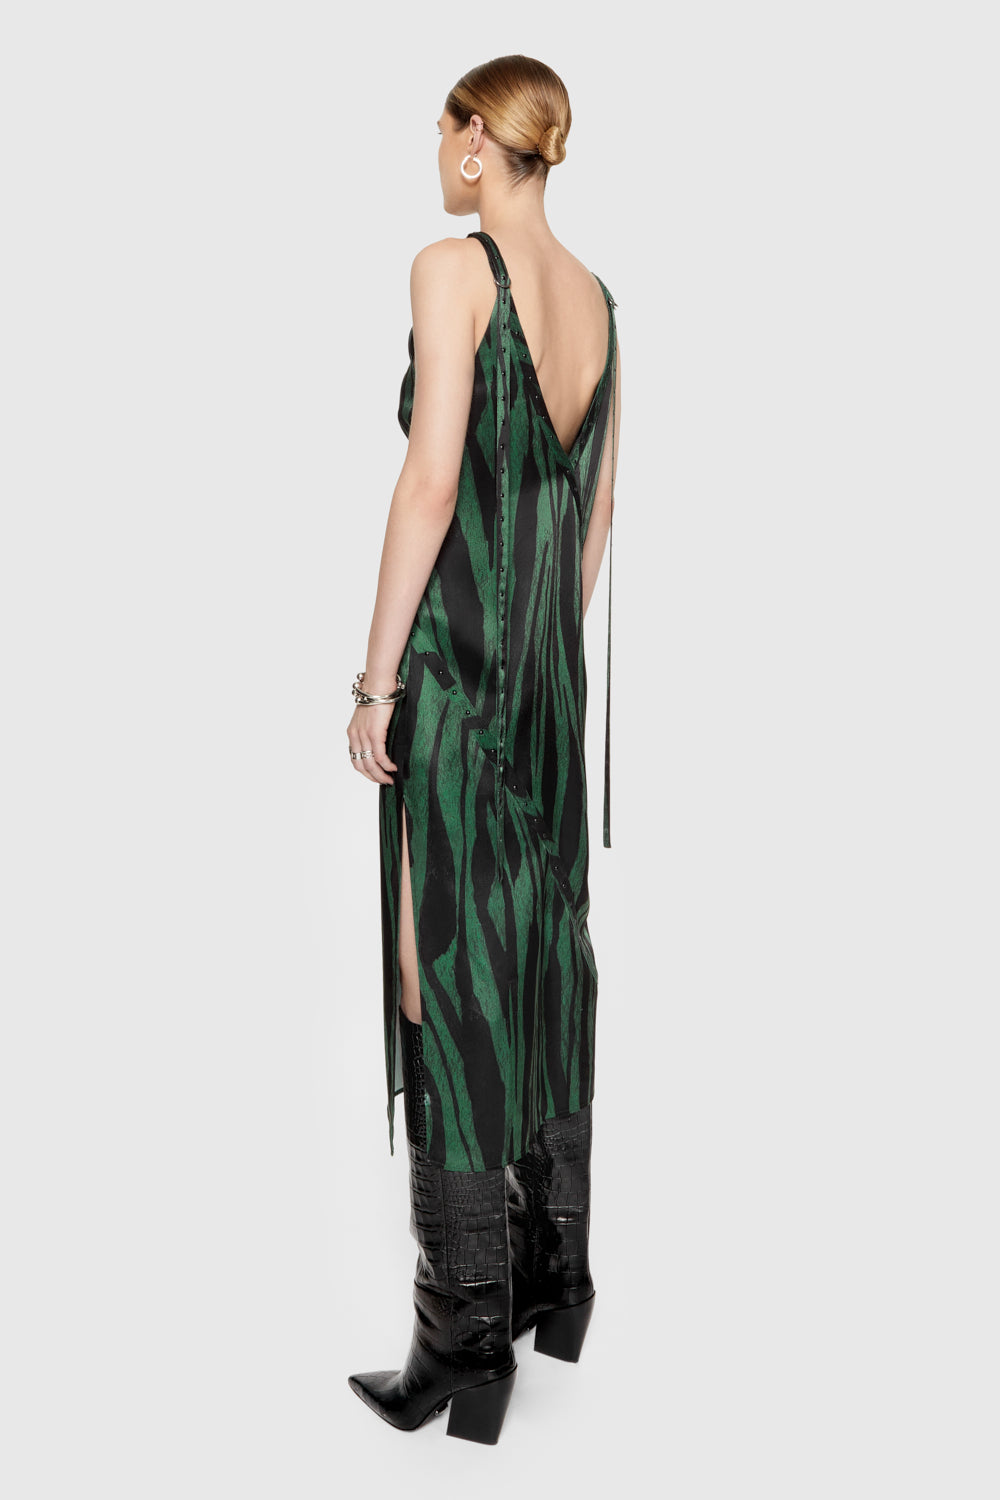 Camilla Studded Printed Maxi Dress